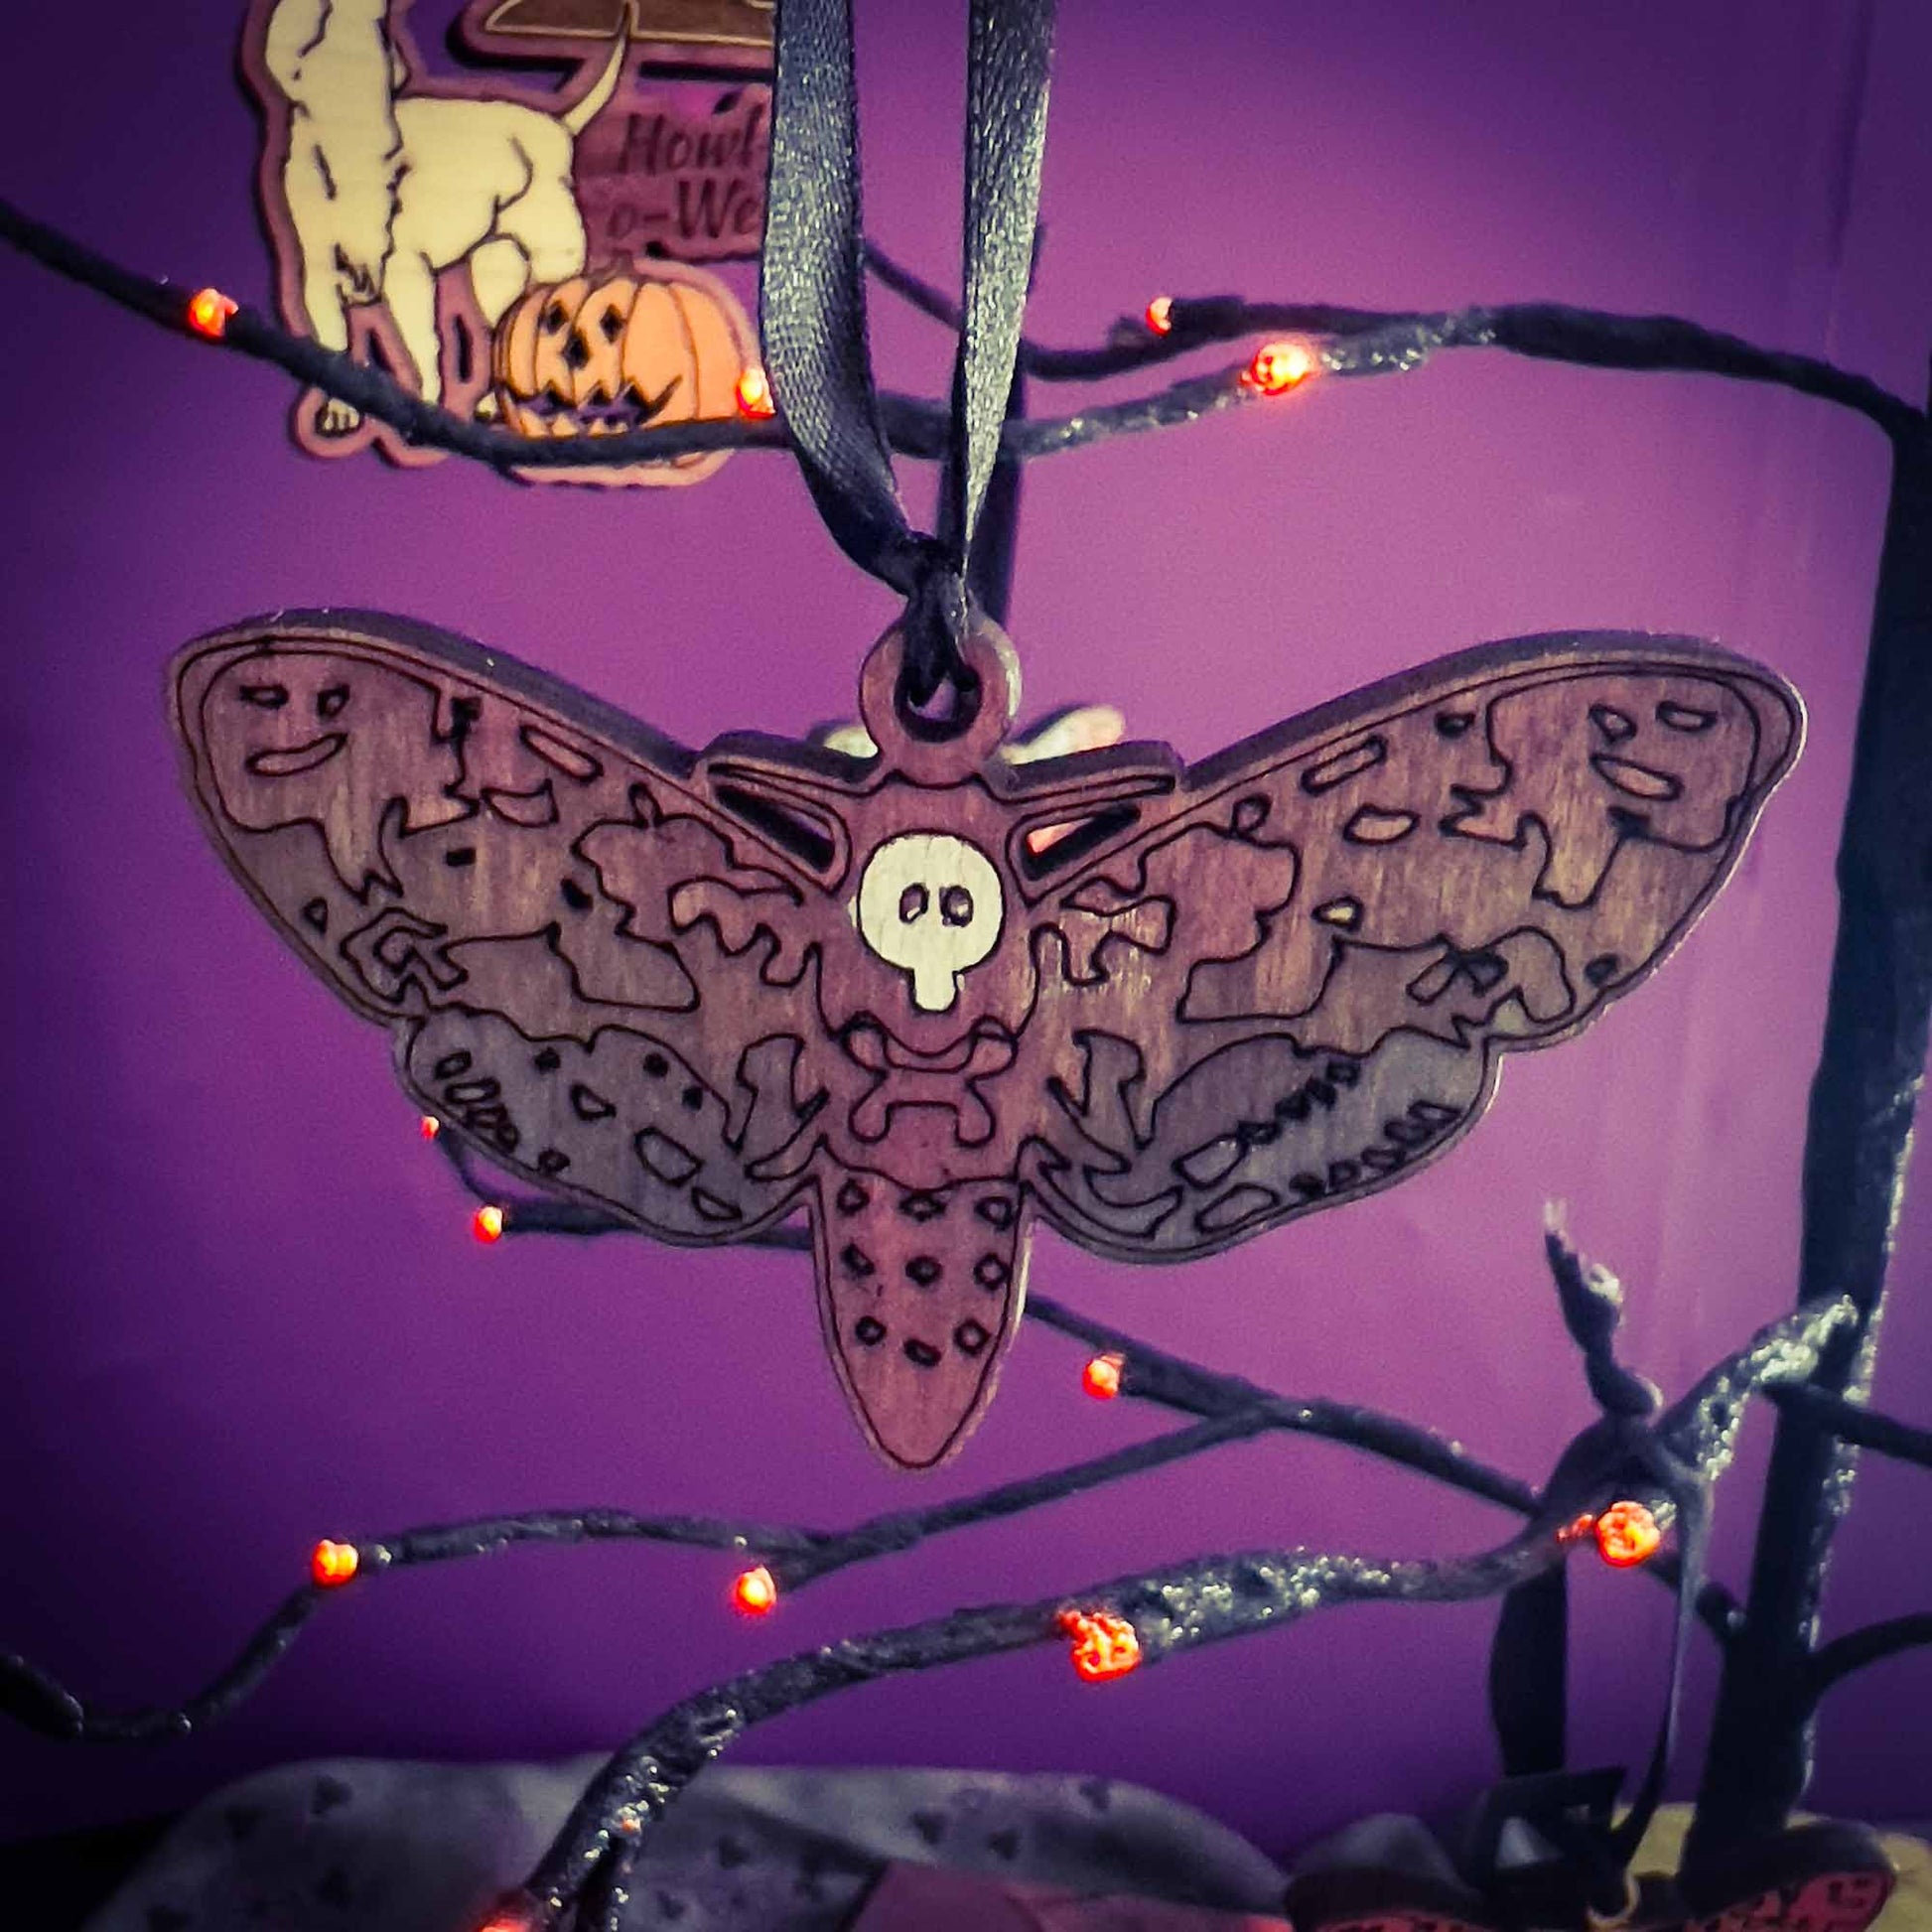 Deaths Head Moth Ornament in Colorful Wood; Melasdesign Handmade; Thomas WV; hanging decor; ornament; moth; deaths head moth; wood; small business; witchy decor; gothic decor; art and decor collection; Halloween decor